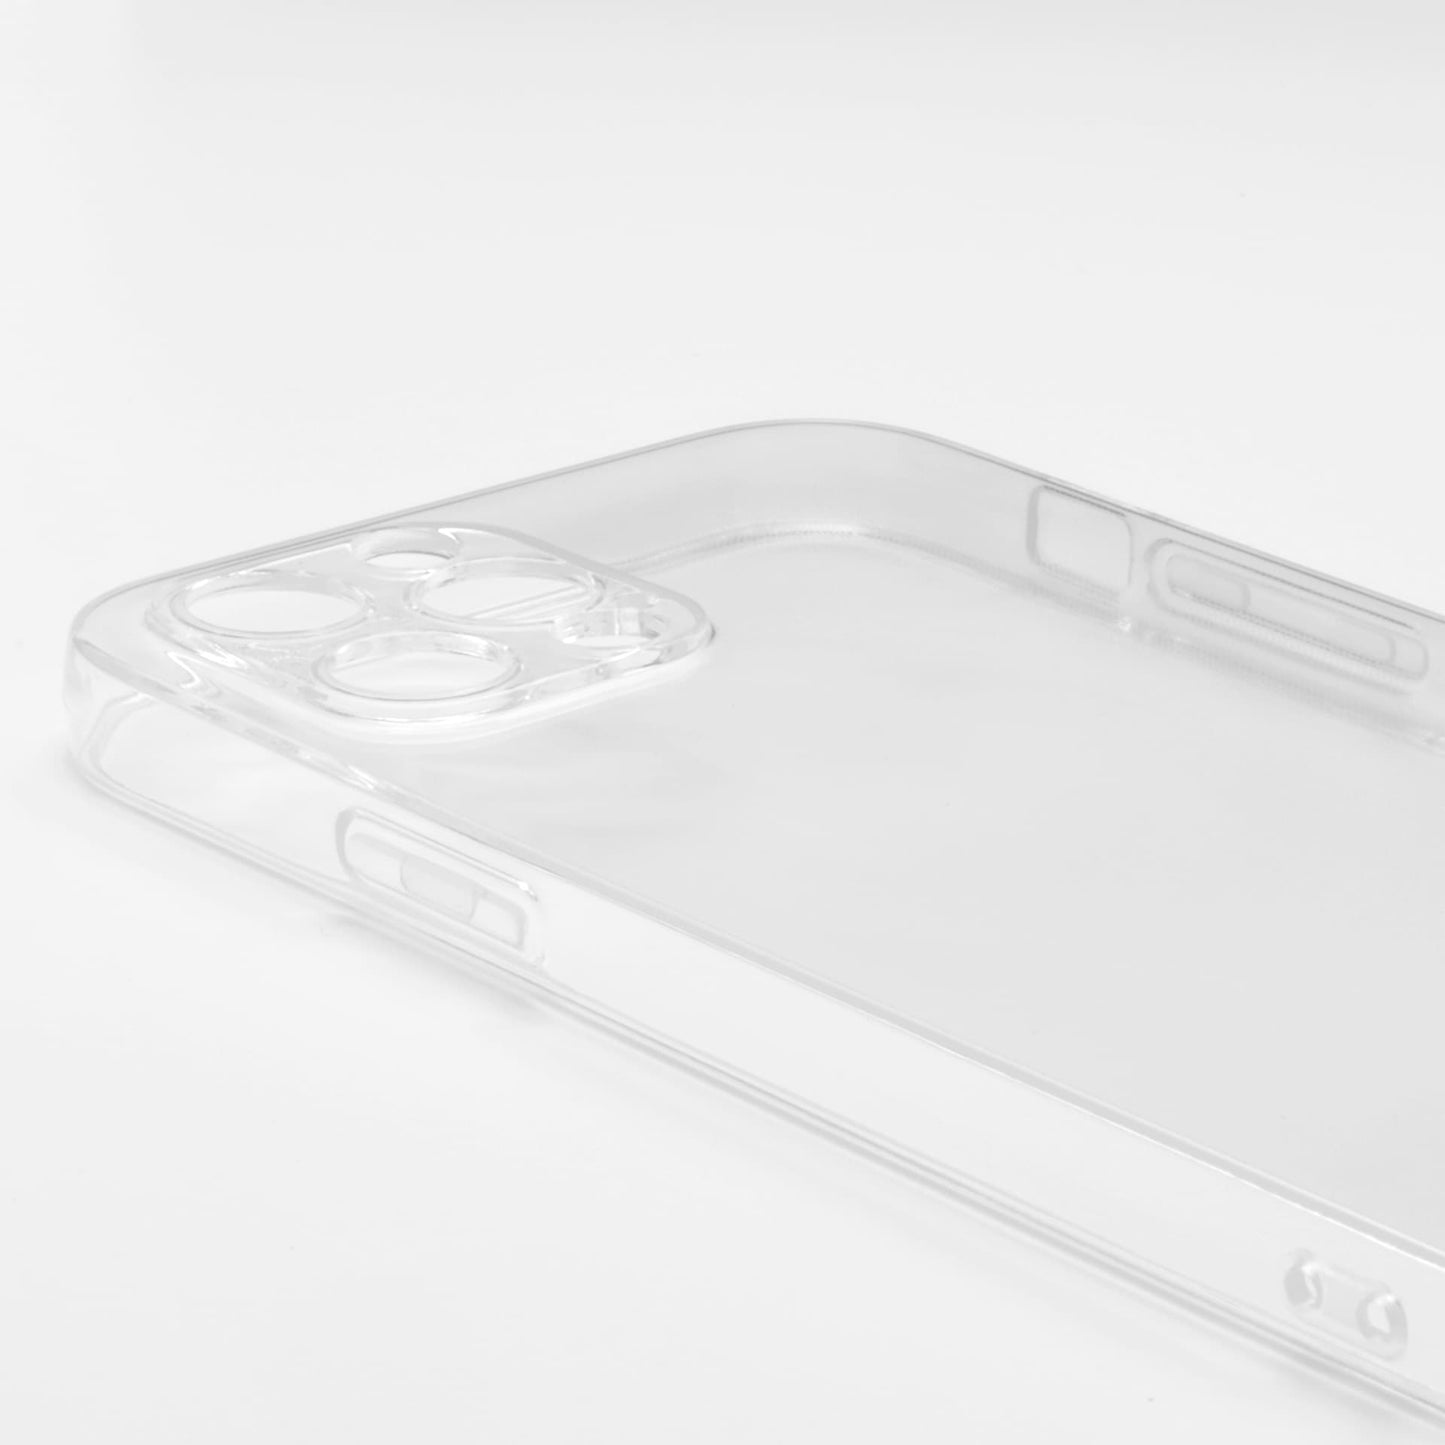 iPhone 12 Pro - Slim-Case Advanced